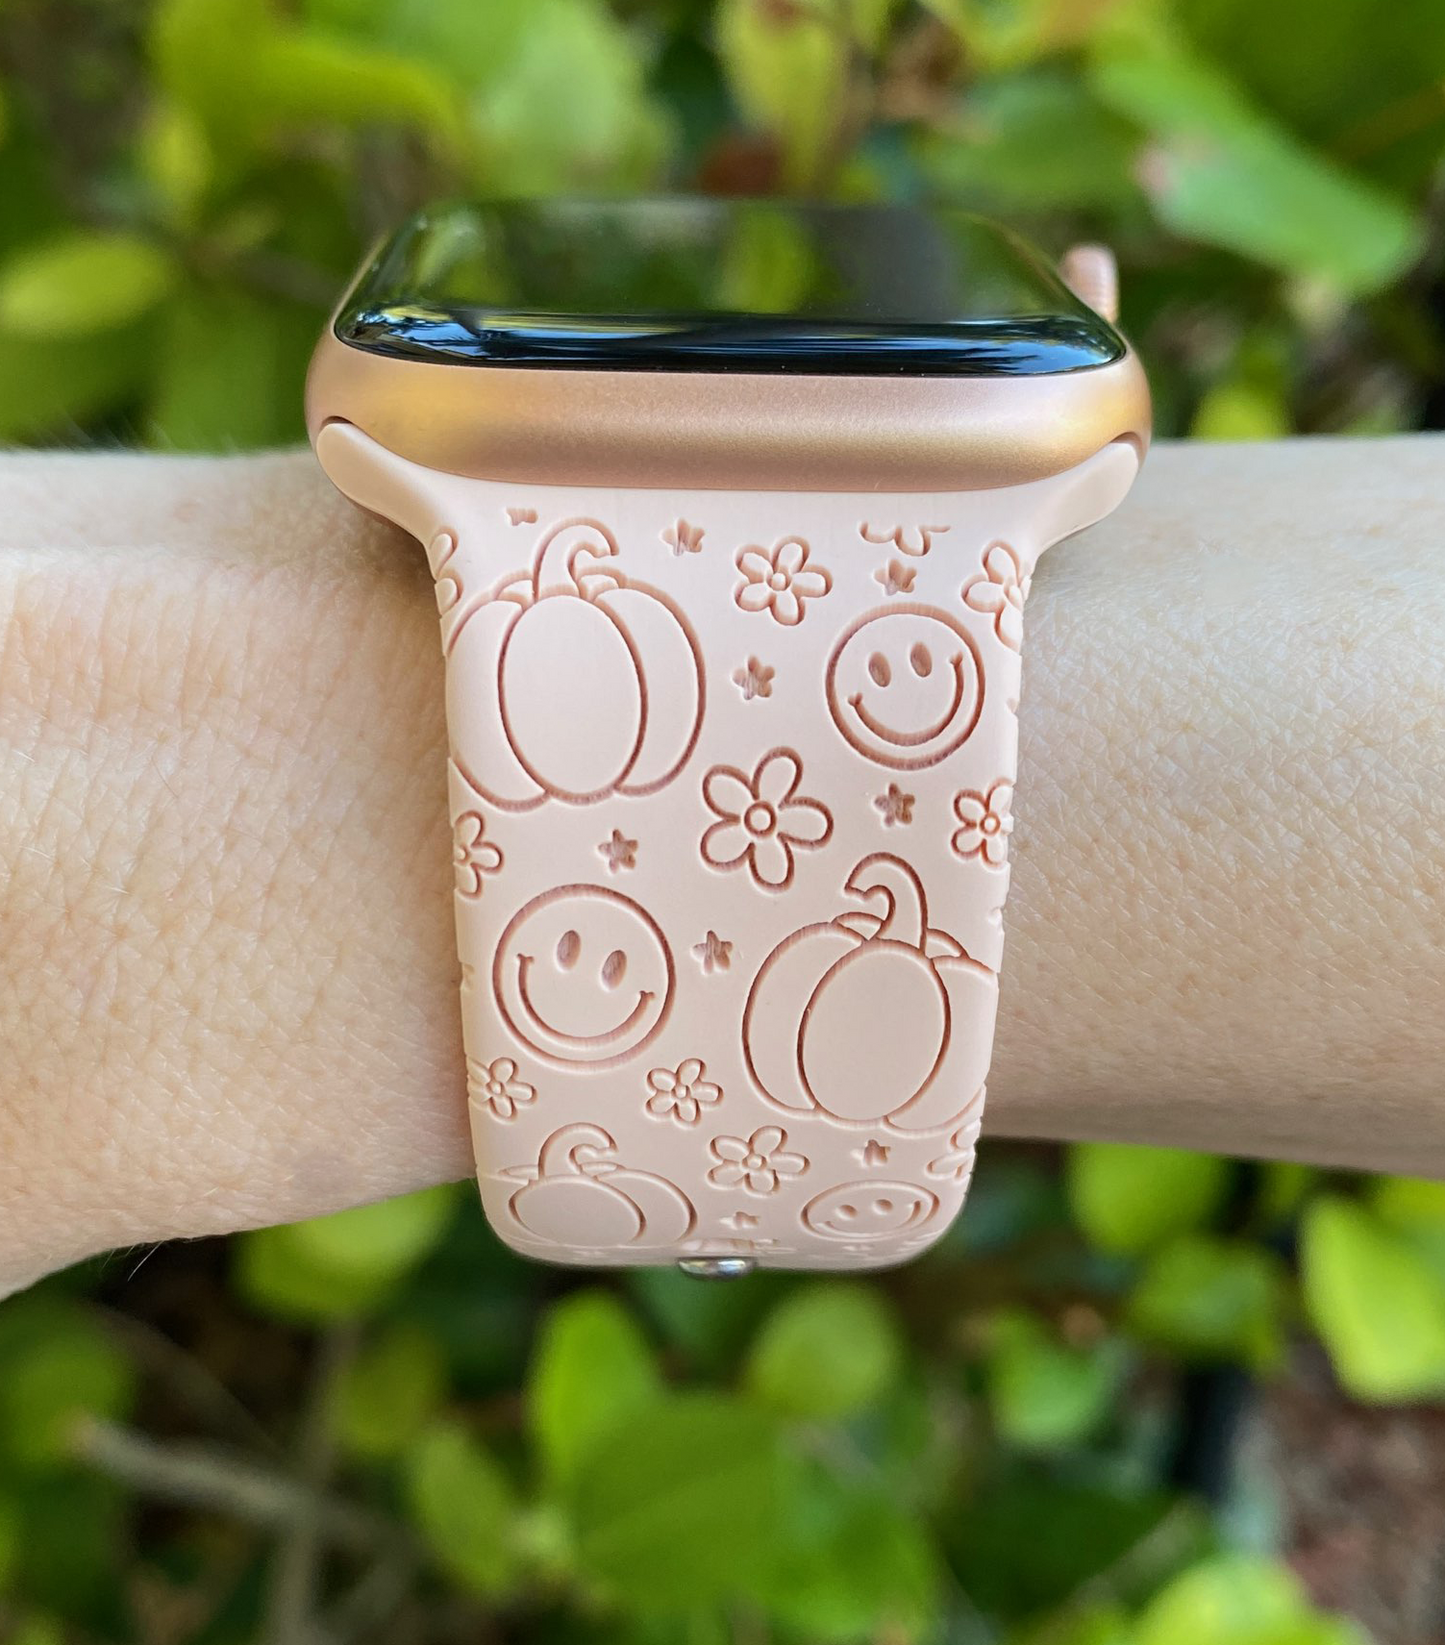 Smiley Pumpkins Apple Watch Band